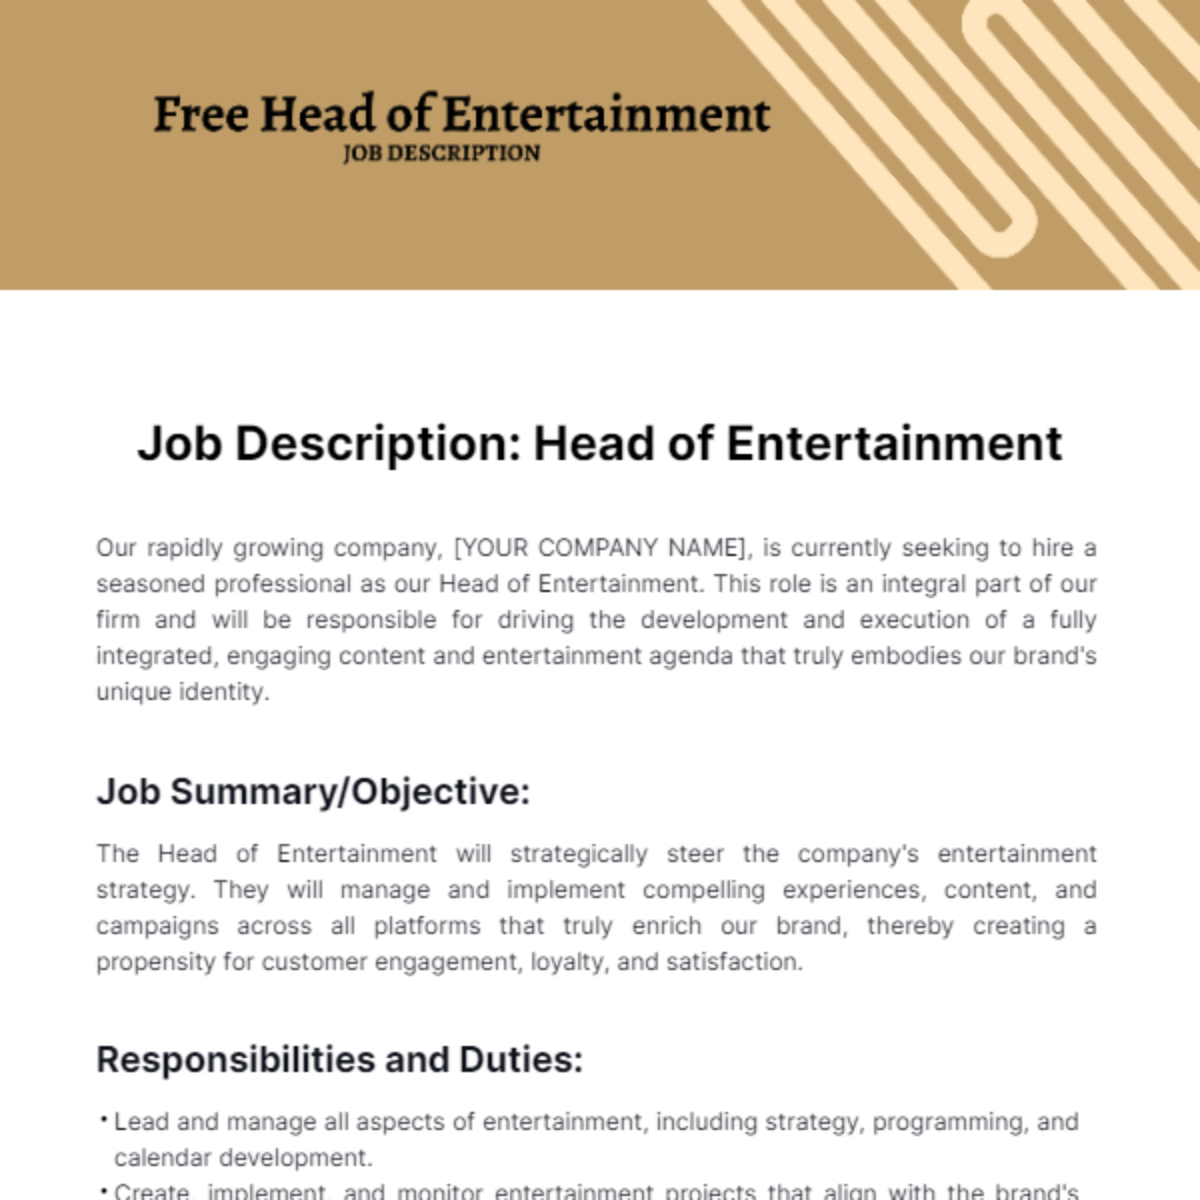 Free Head of Entertainment Job Description Template